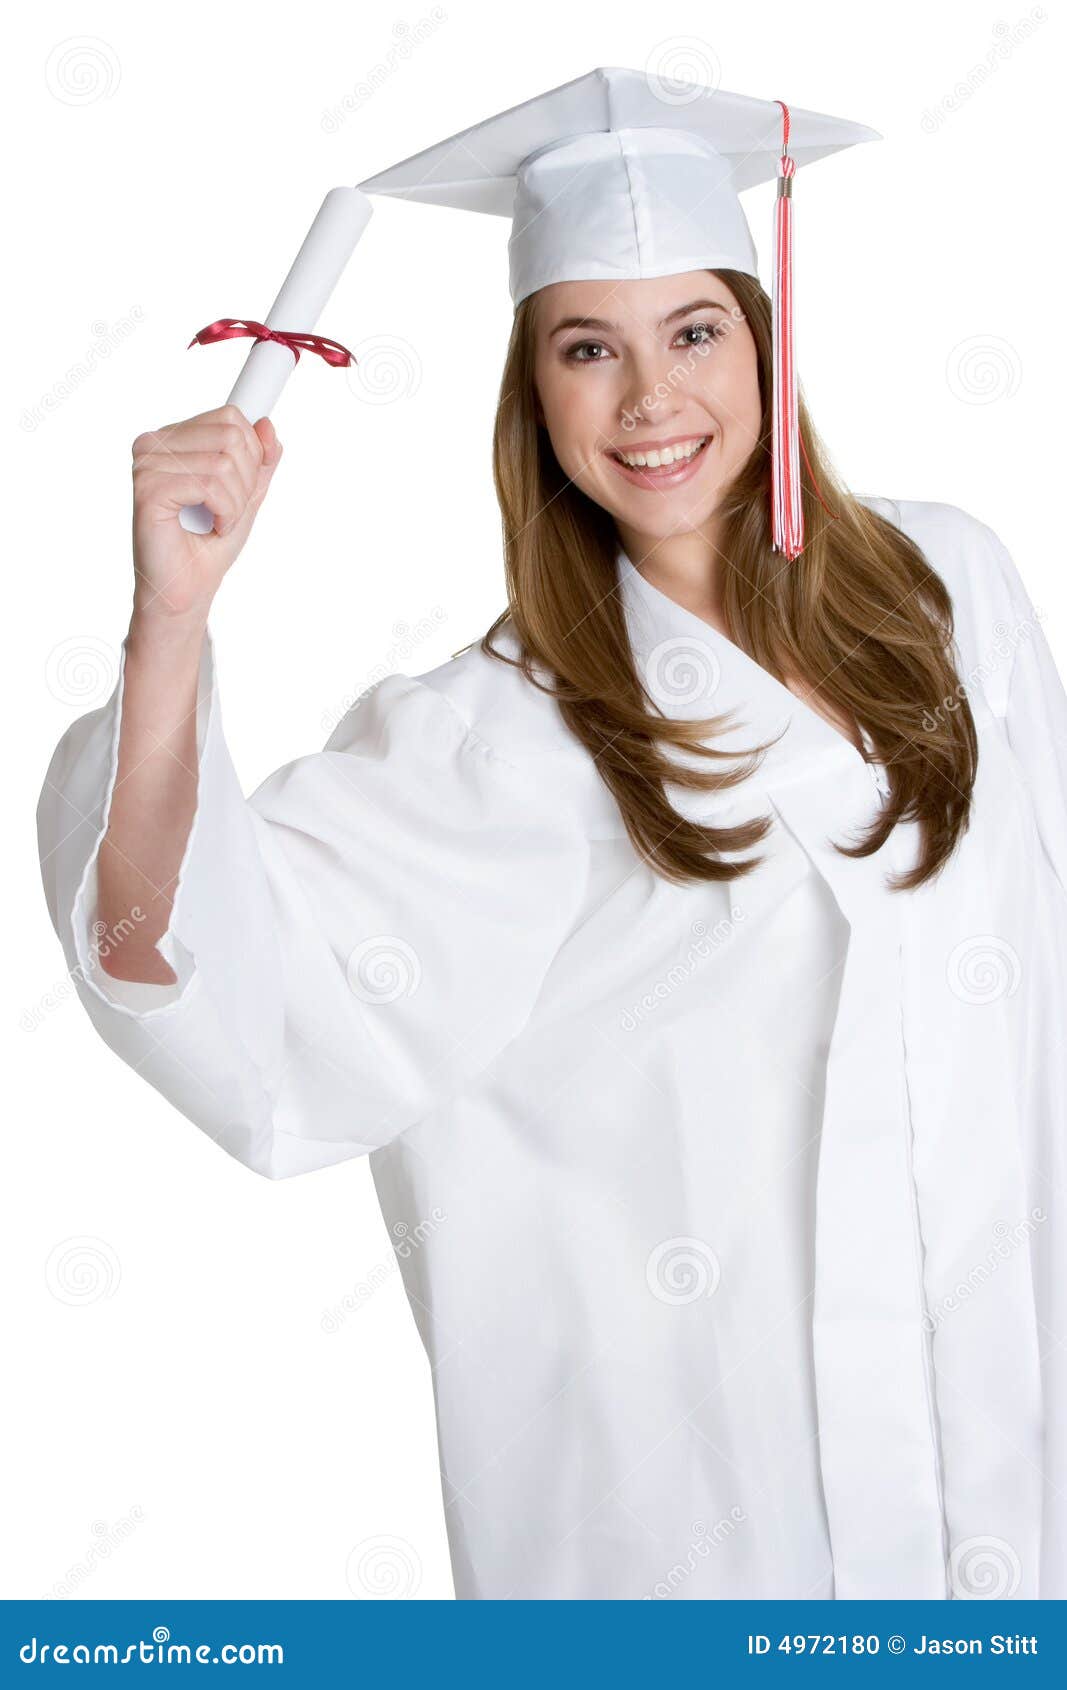 Graduating Teen Girl stock photo Image of graduates 